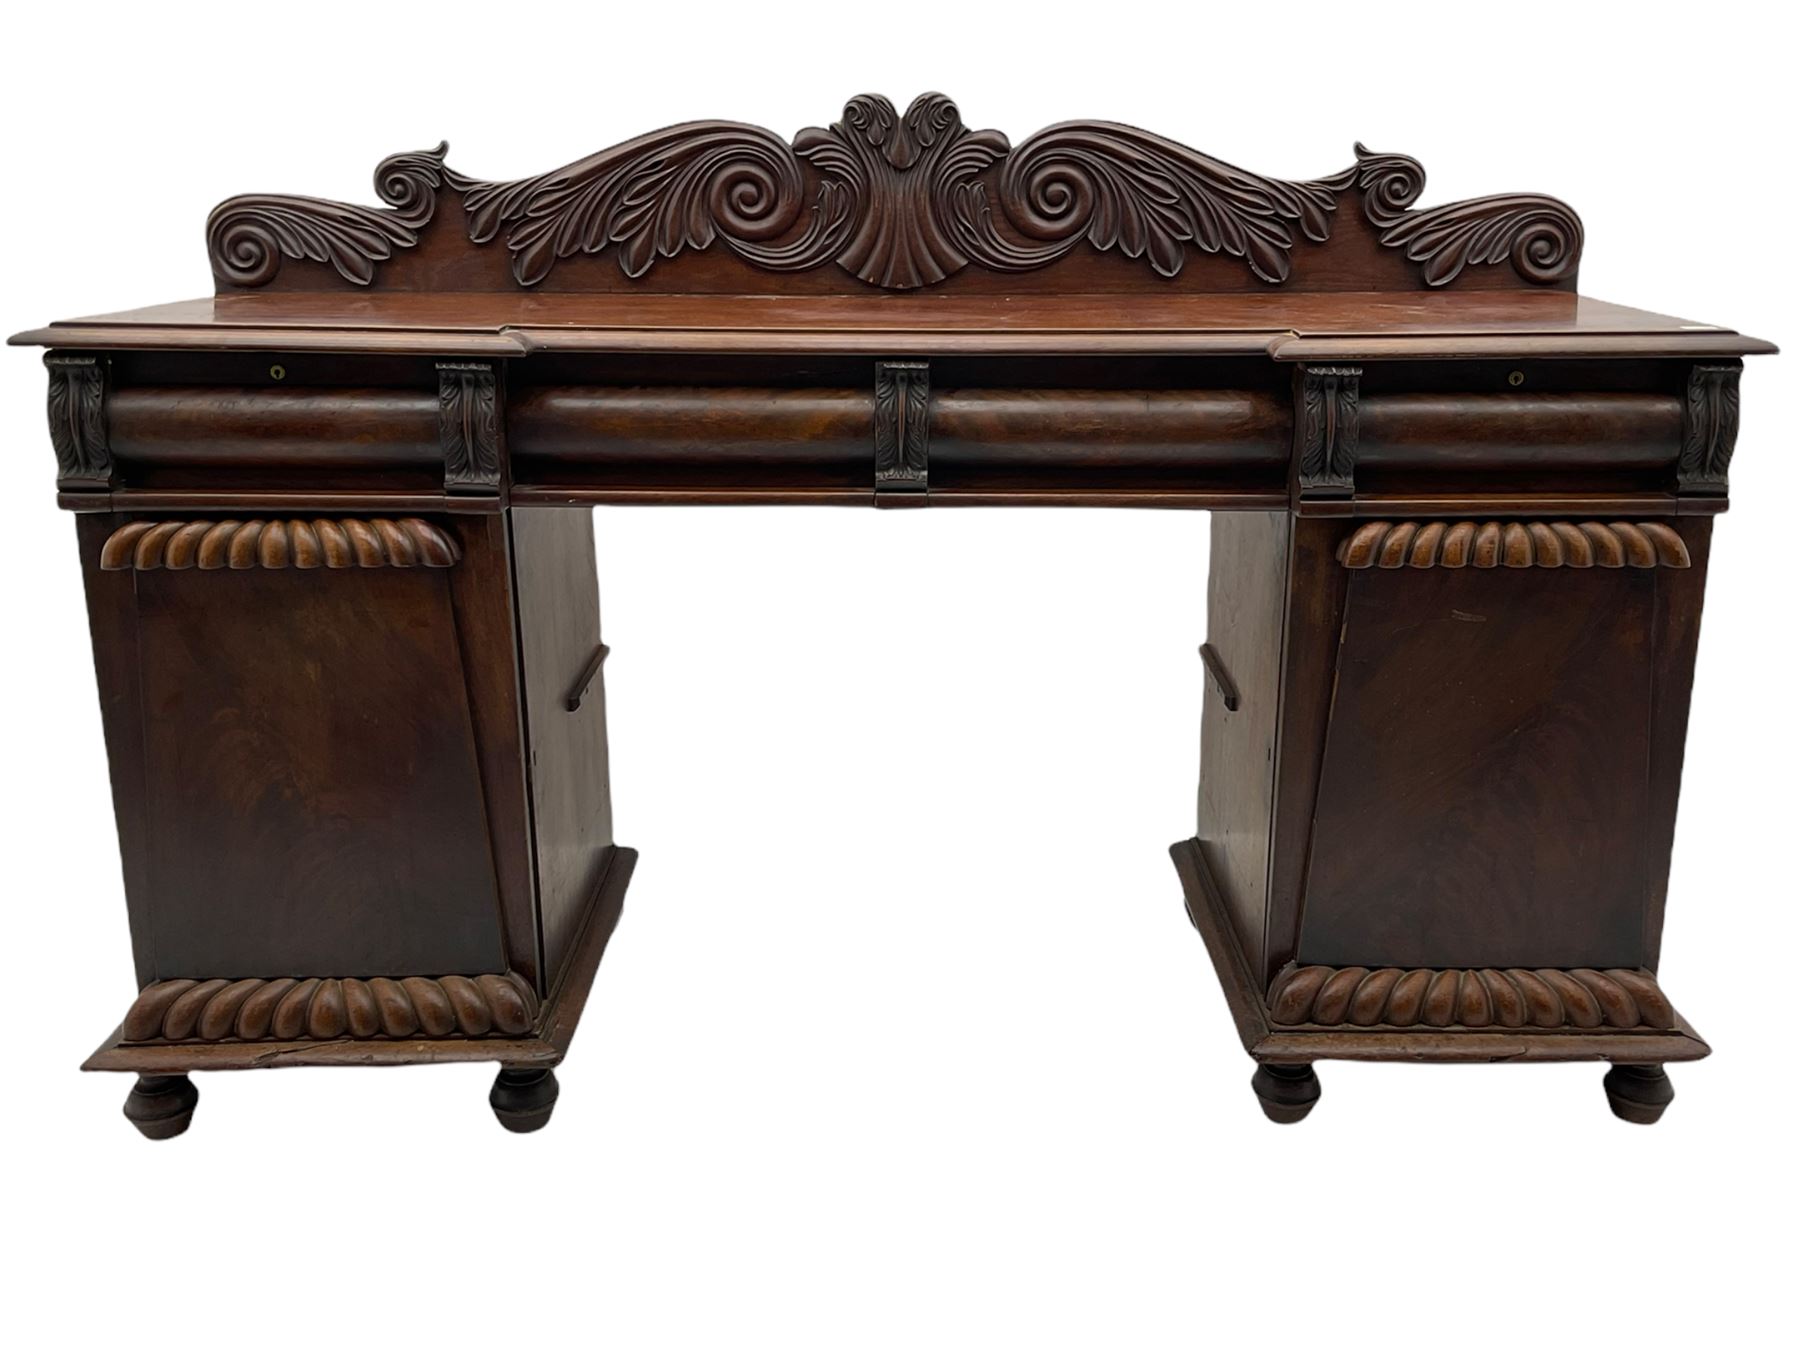 Early 19th century figured mahogany twin pedestal sideboard